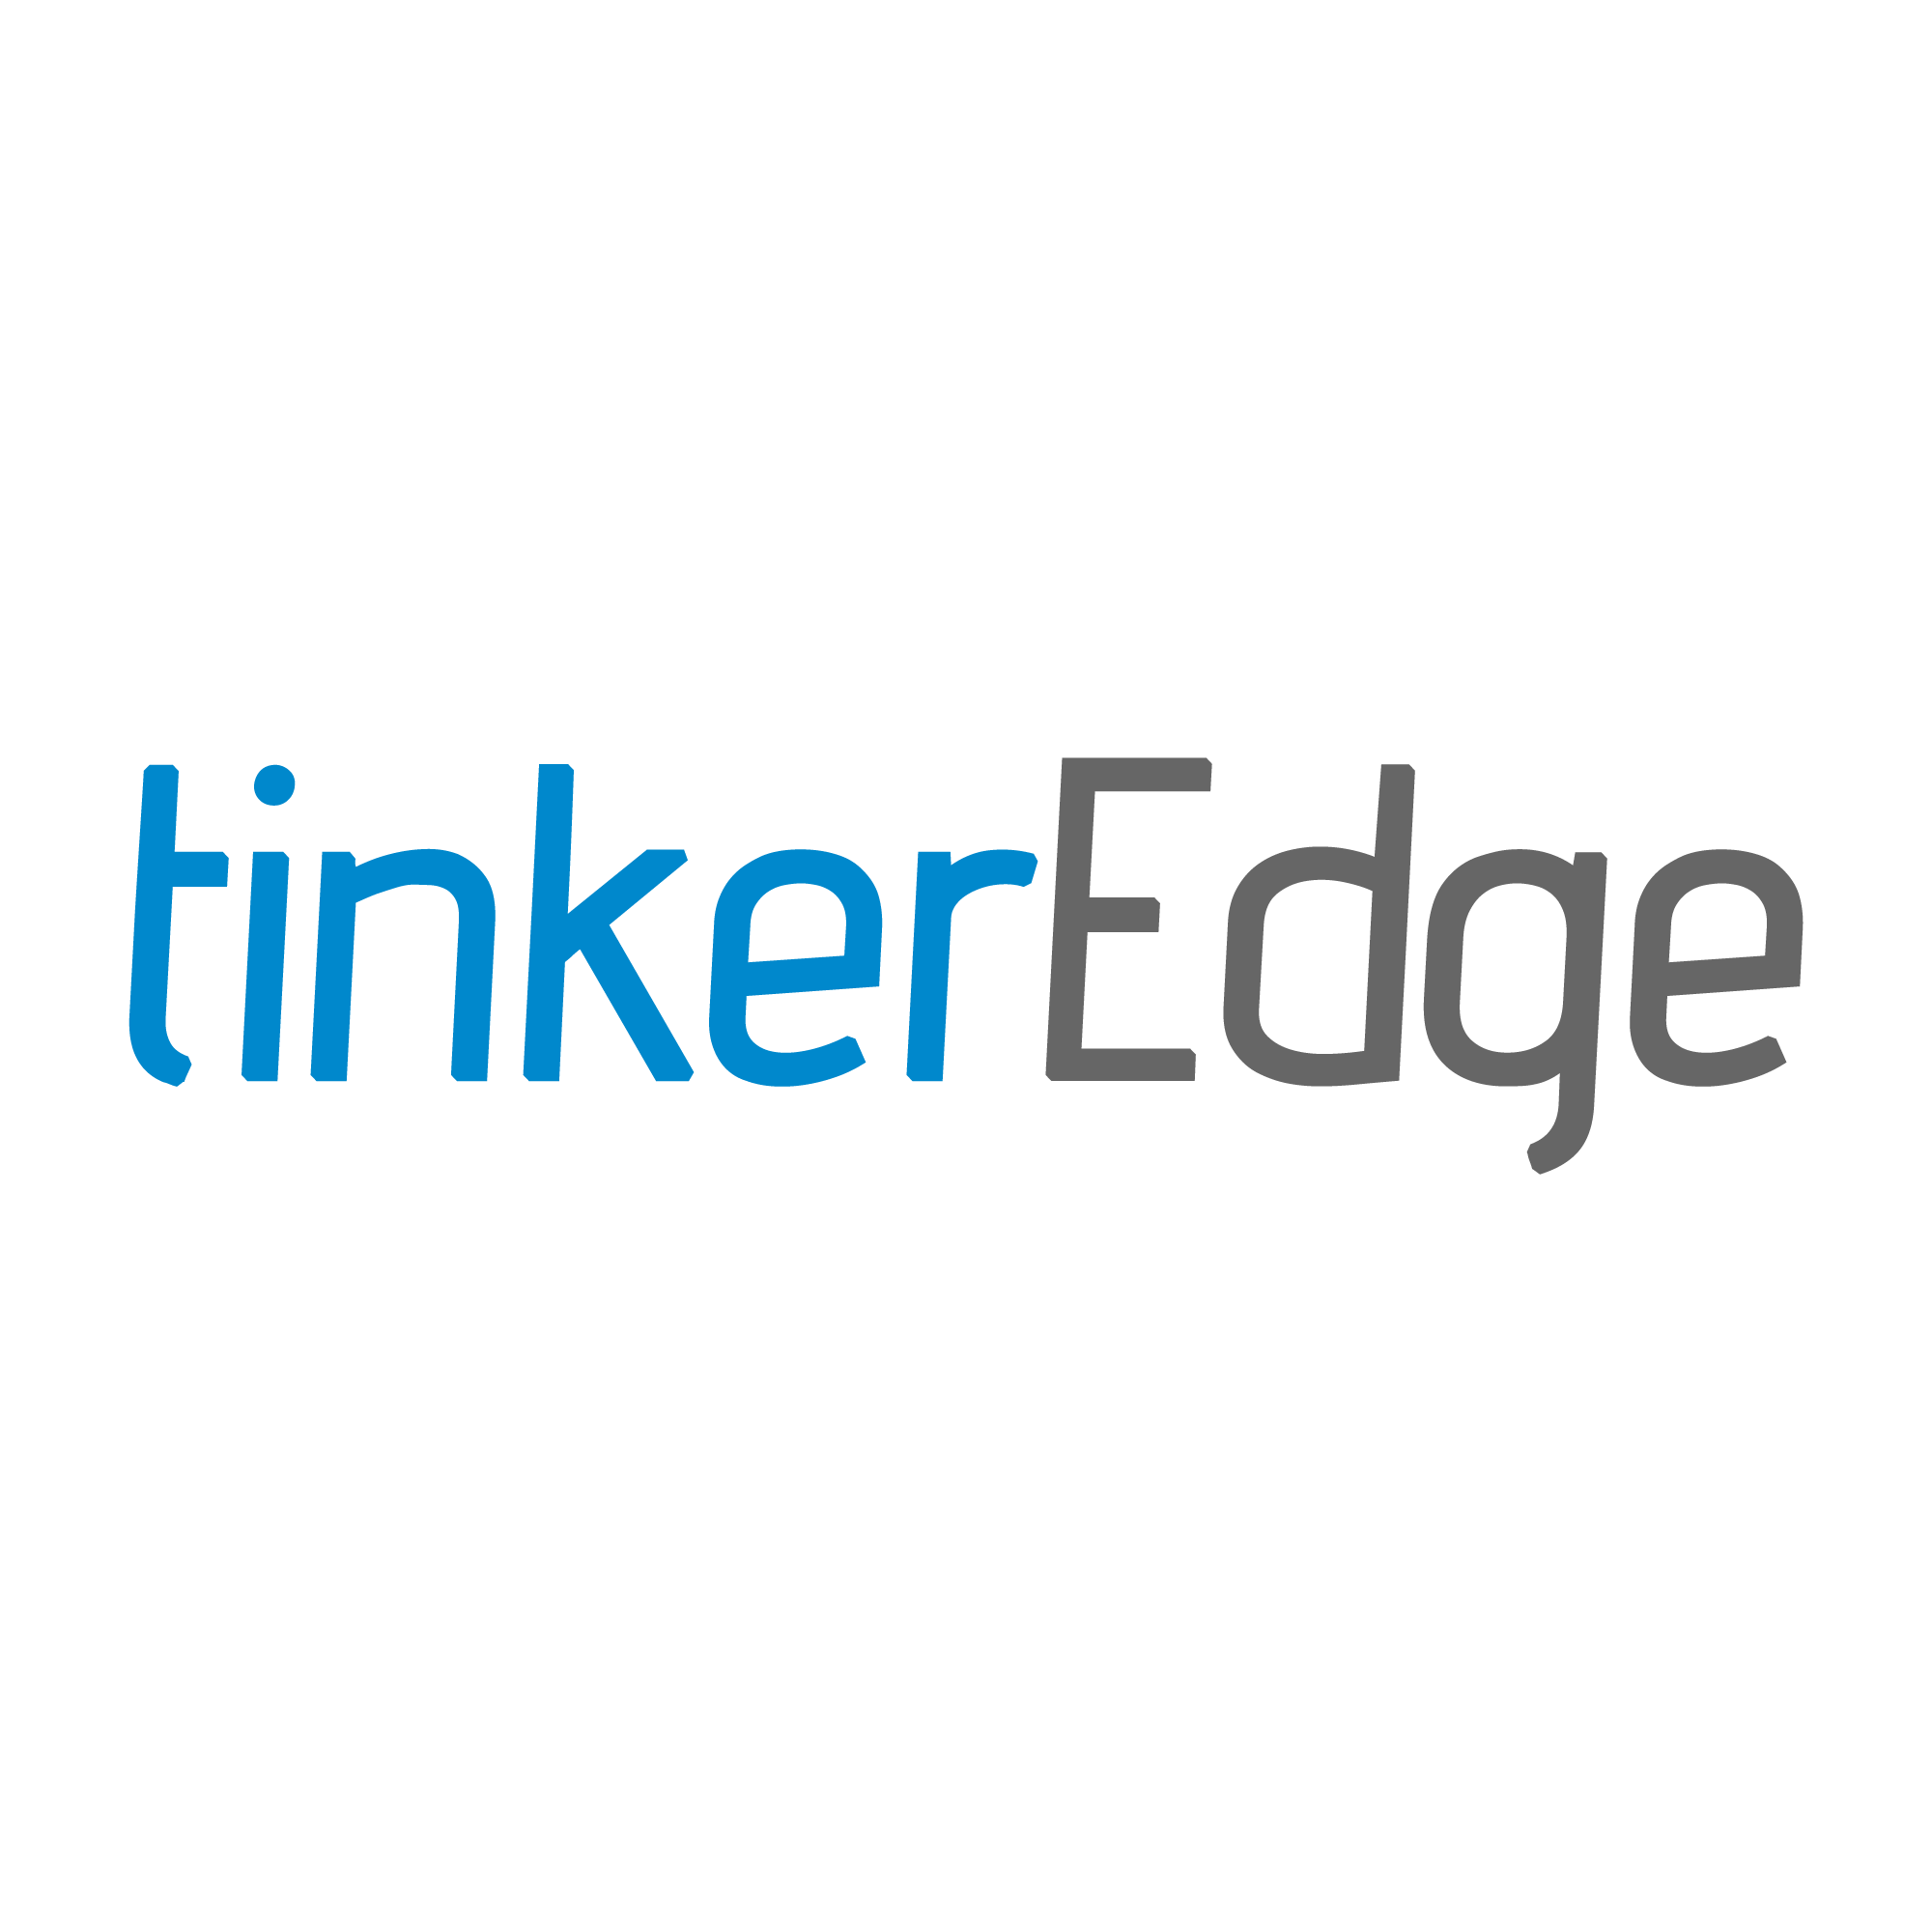 tinkerEdge